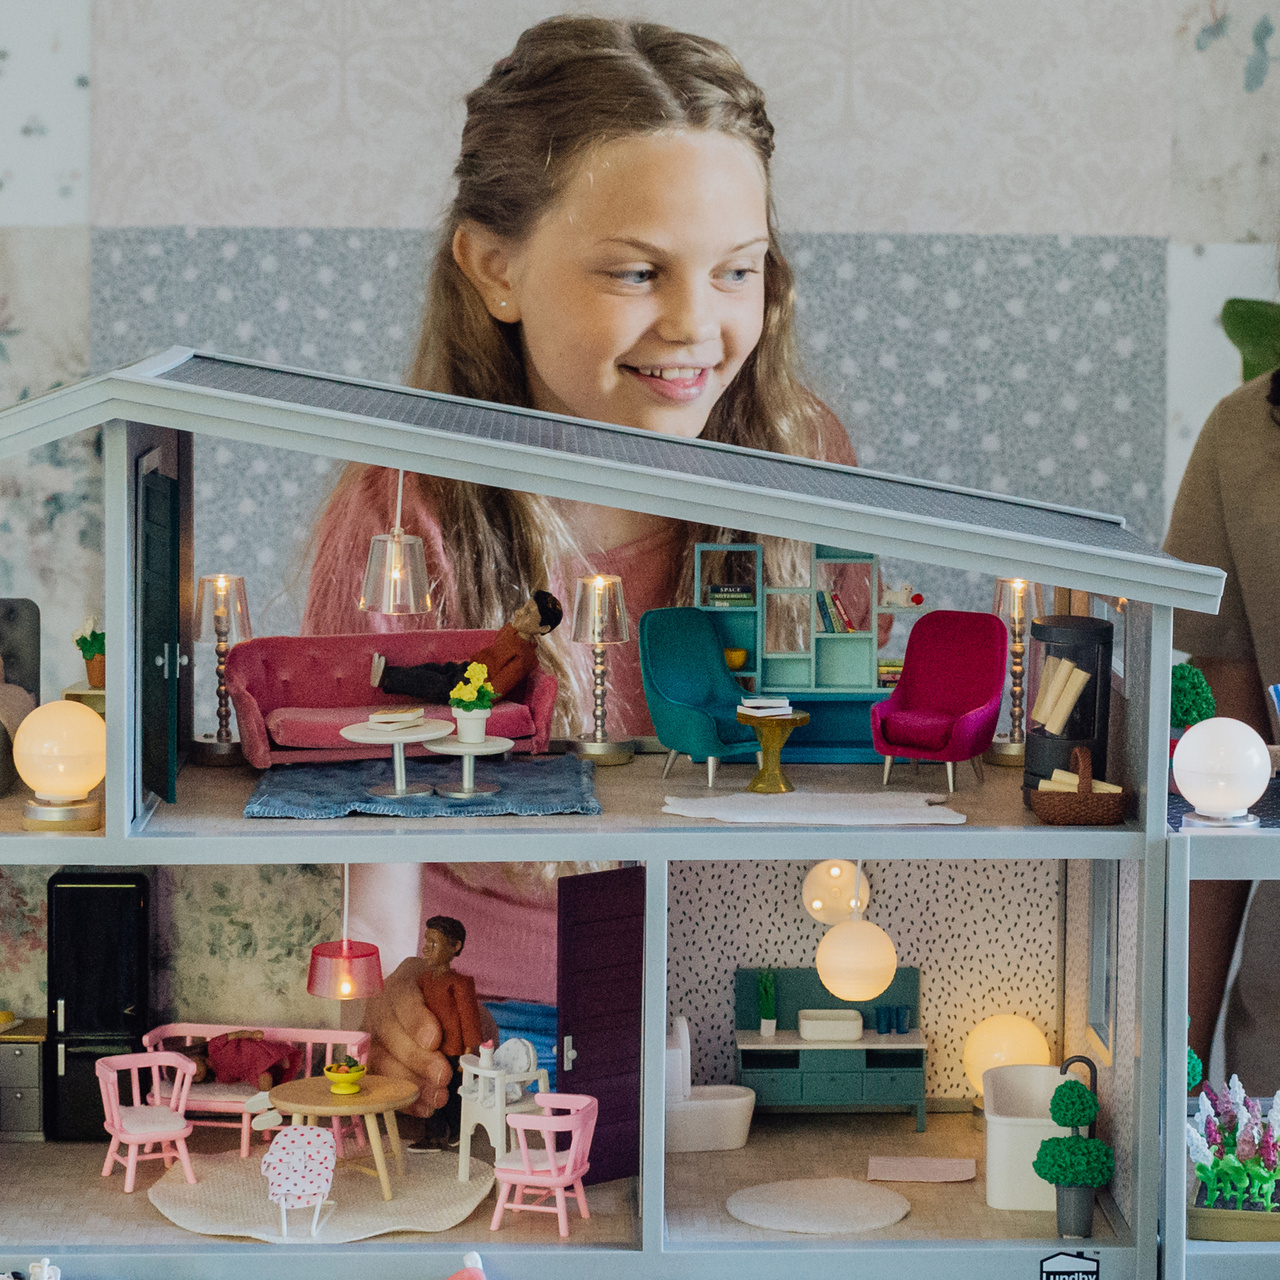 Doll house furniture & doll house accessories lundby dollhouse furniture bathroom set basic